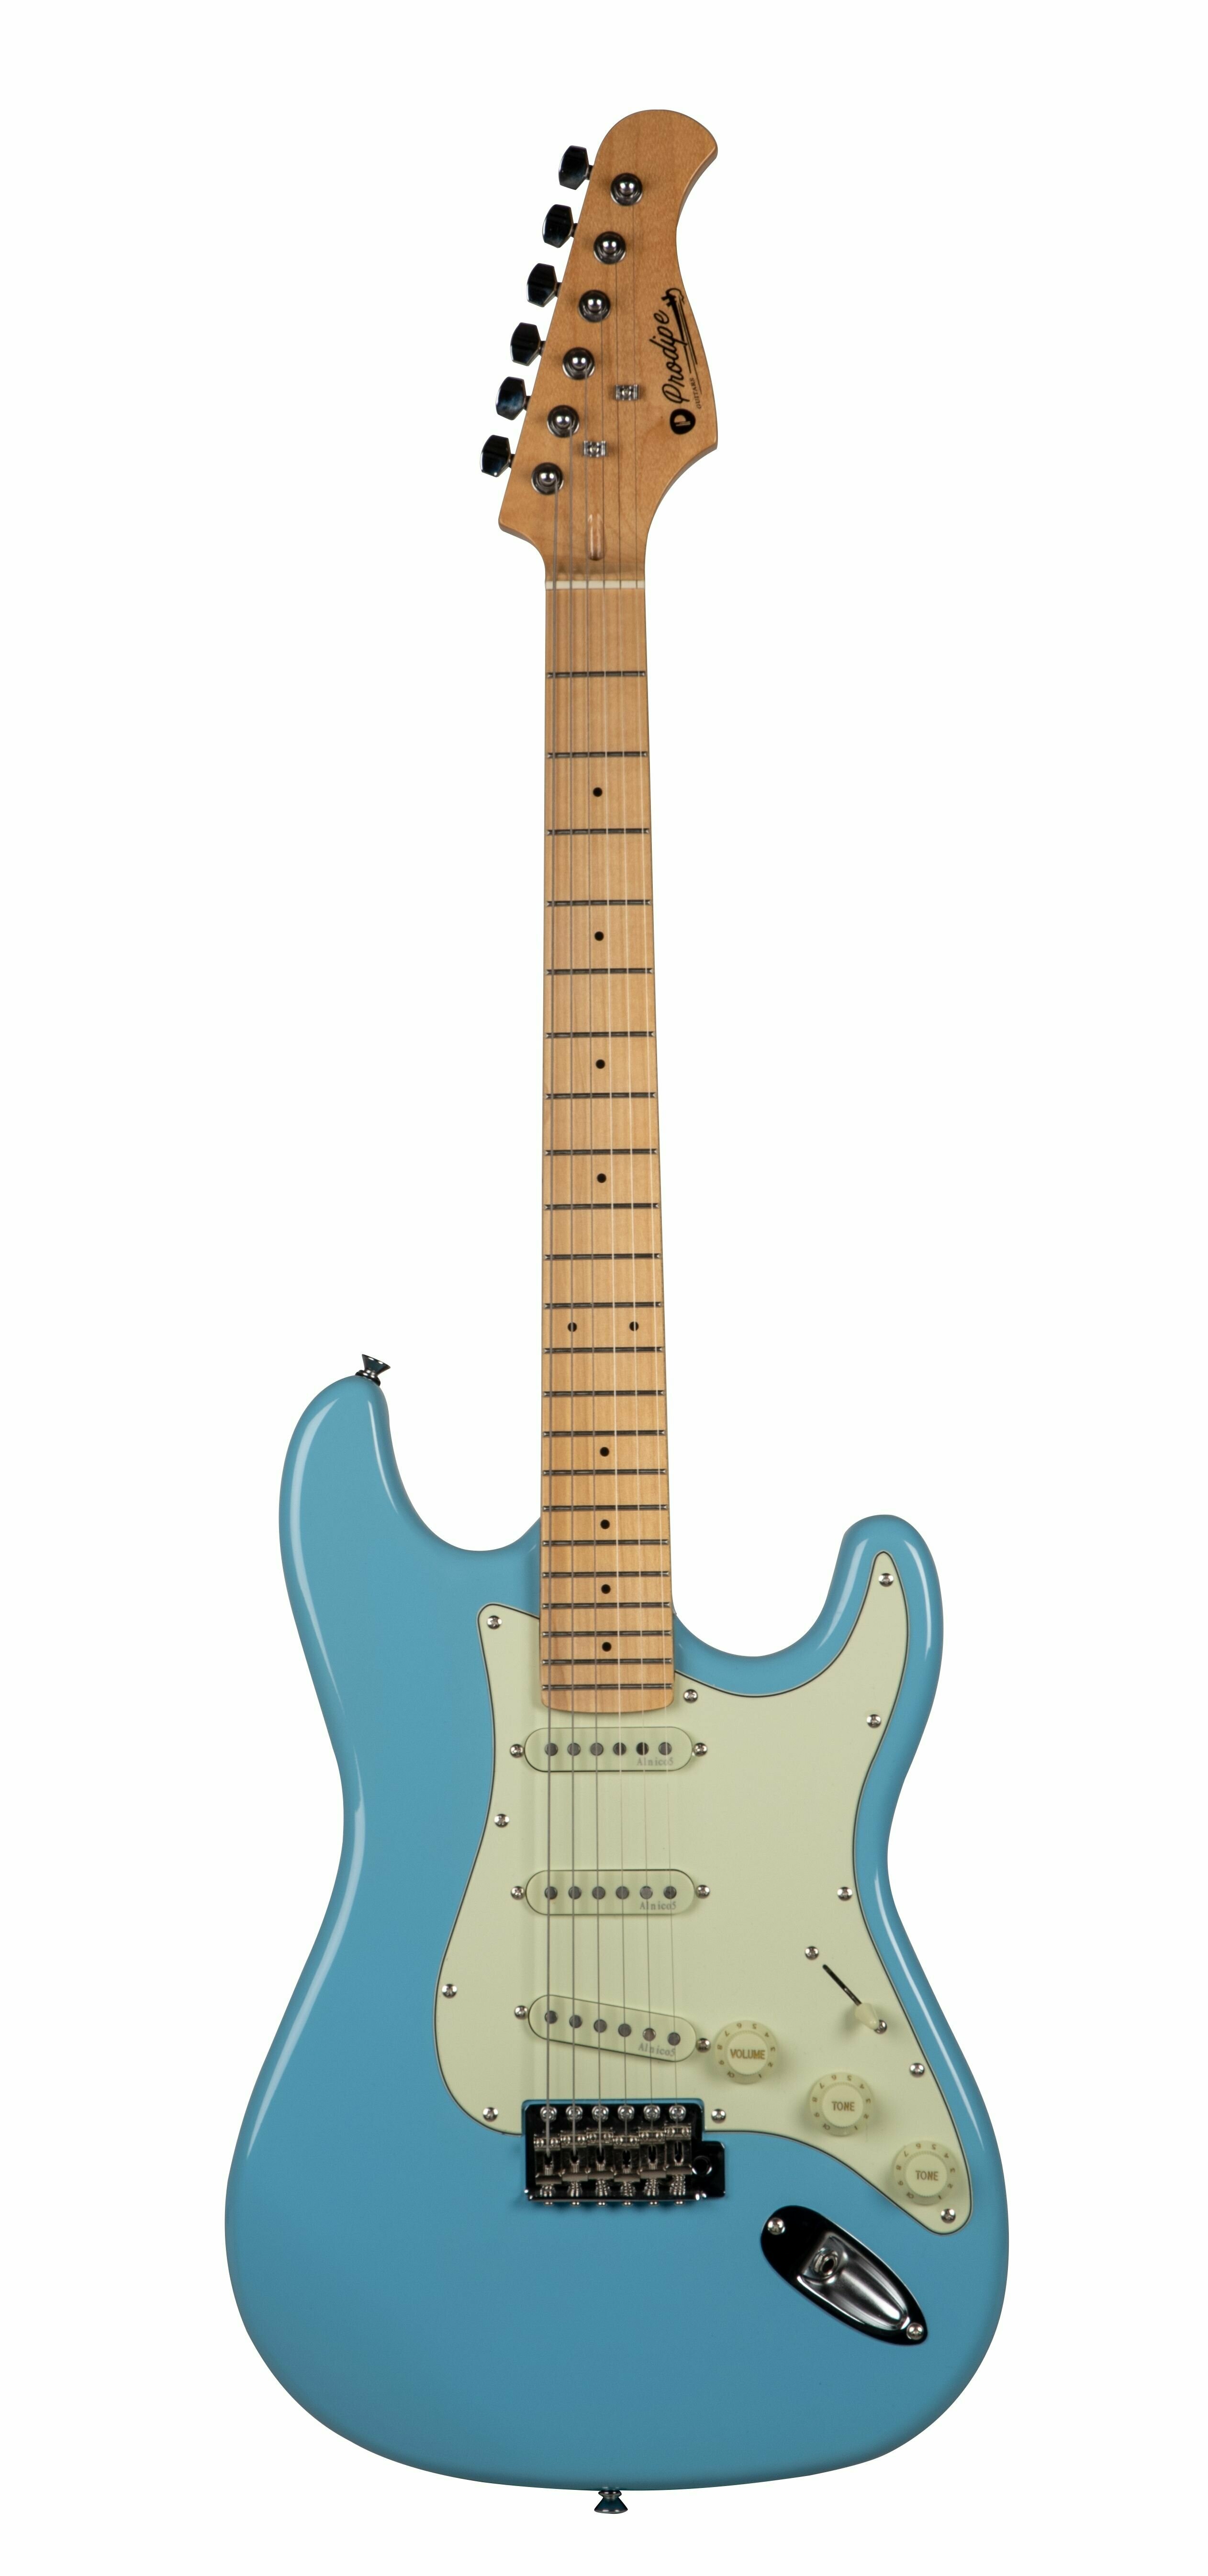 Электрогитара "Stratocaster" (S-S-S), Prodipe - ST80MA Голубая